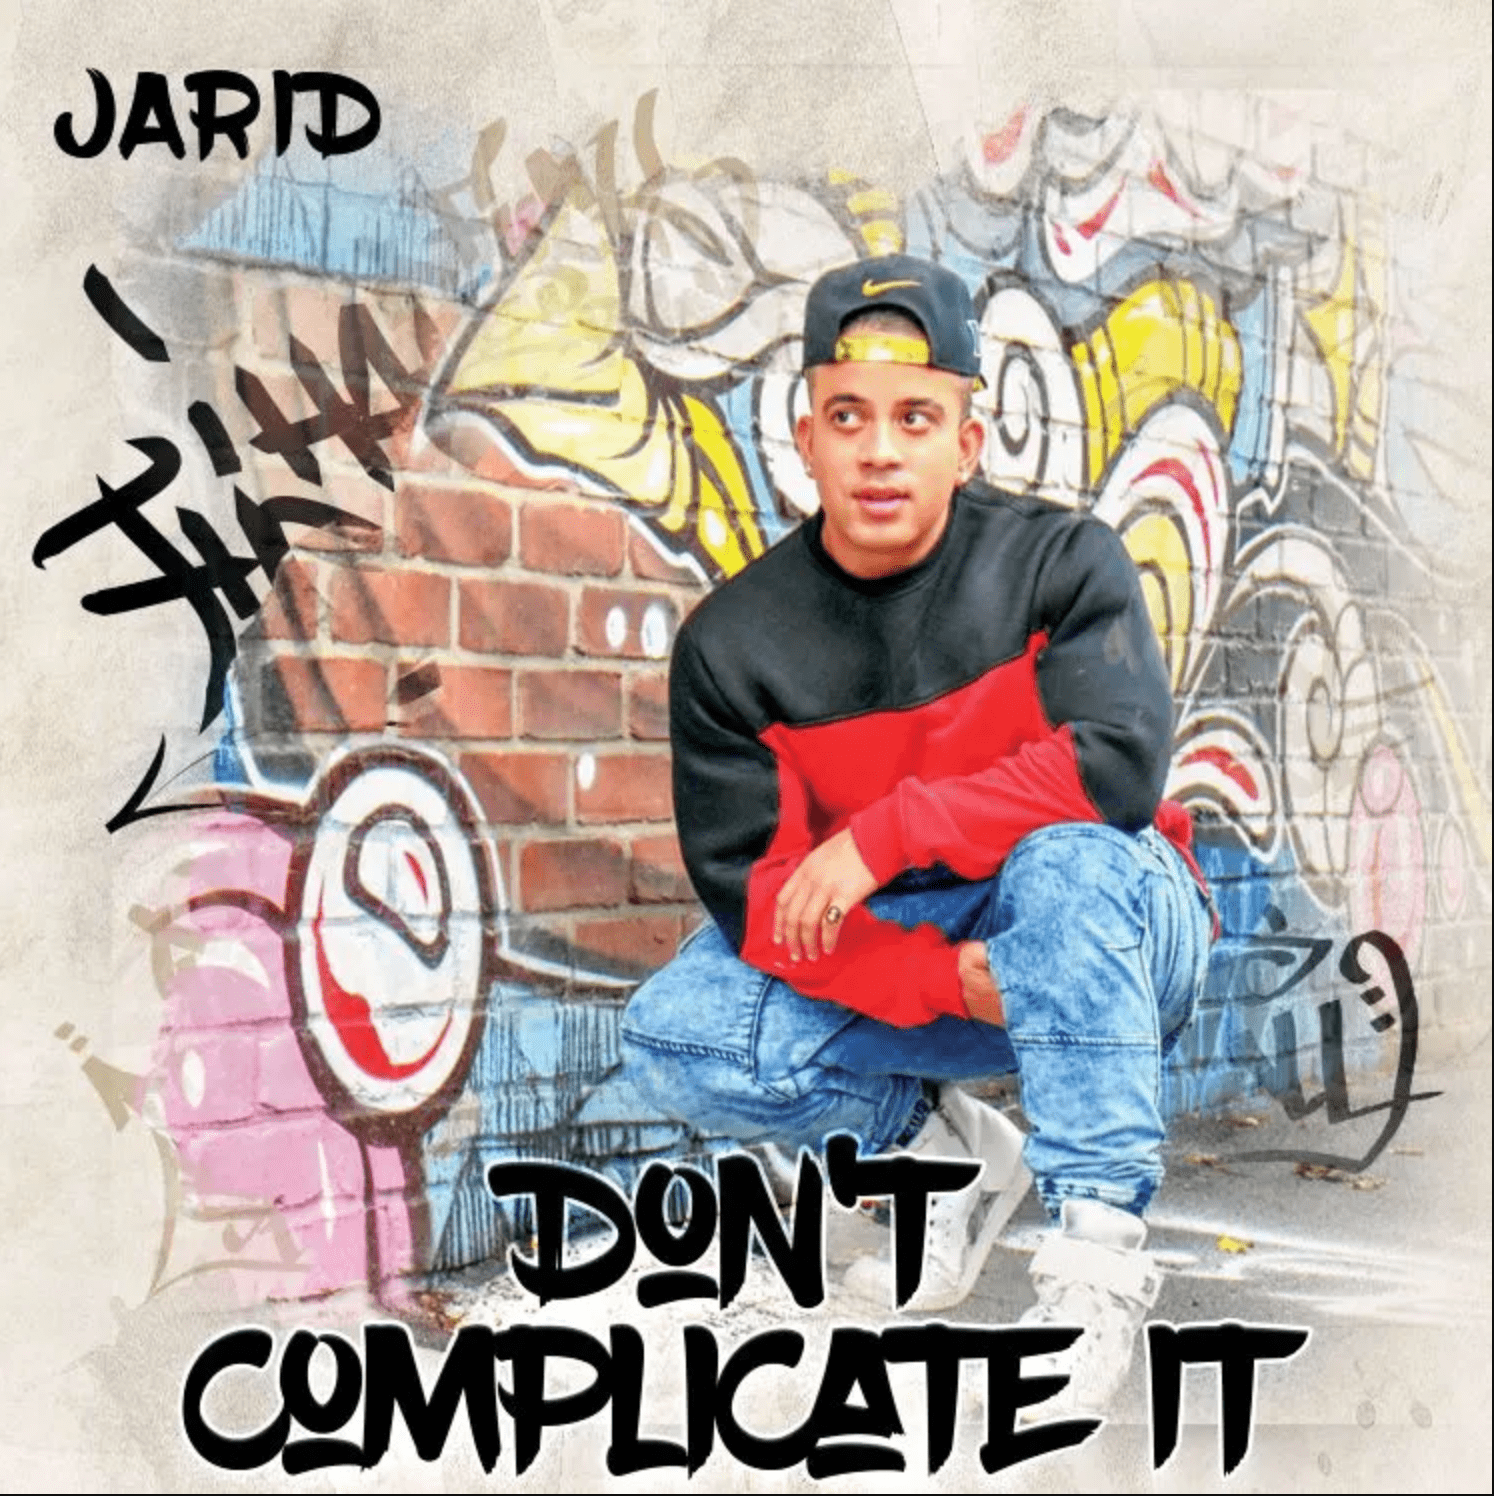 Jarid - "Don't Complicate It"